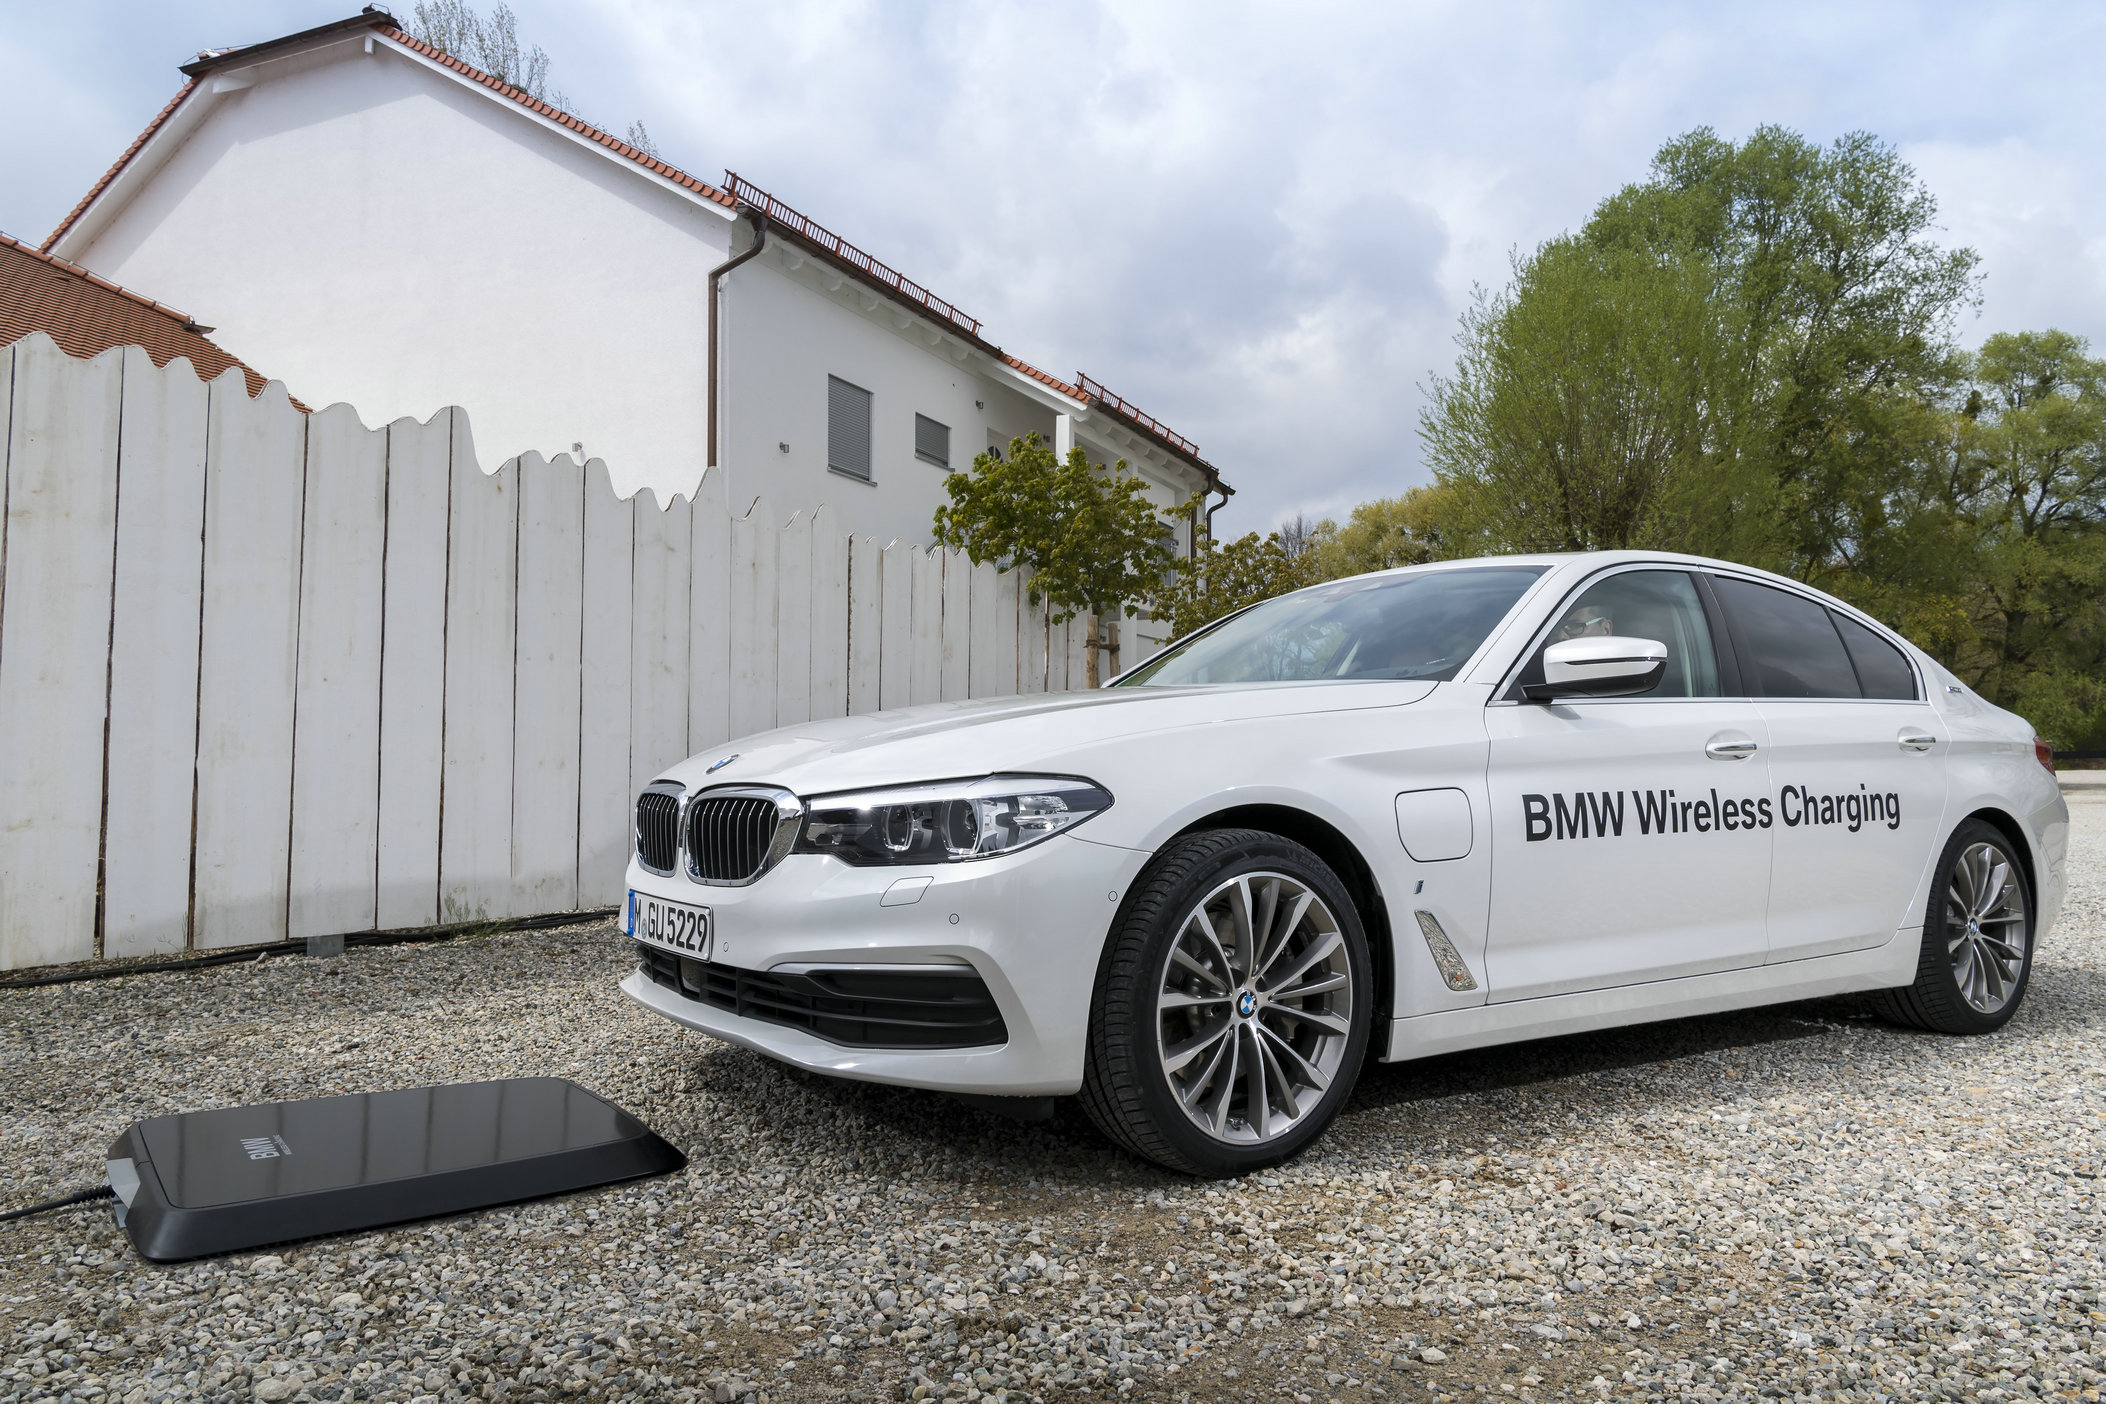 02.BMW无线充电车辆与充电底座.jpg